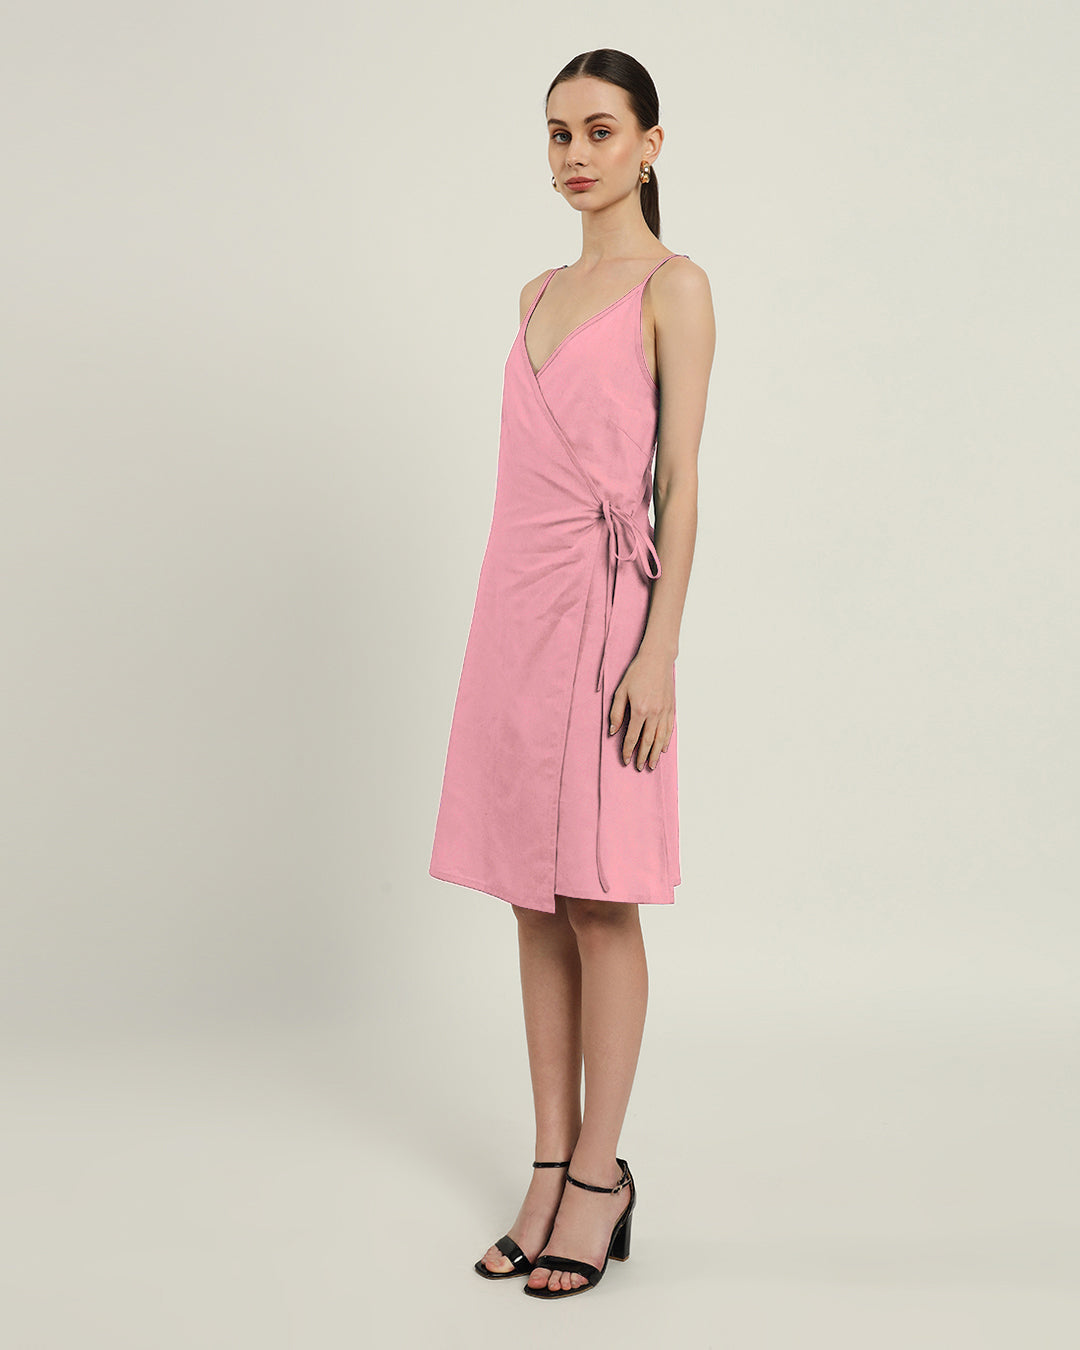 The Chambéry Fondant Pink Cotton Dress